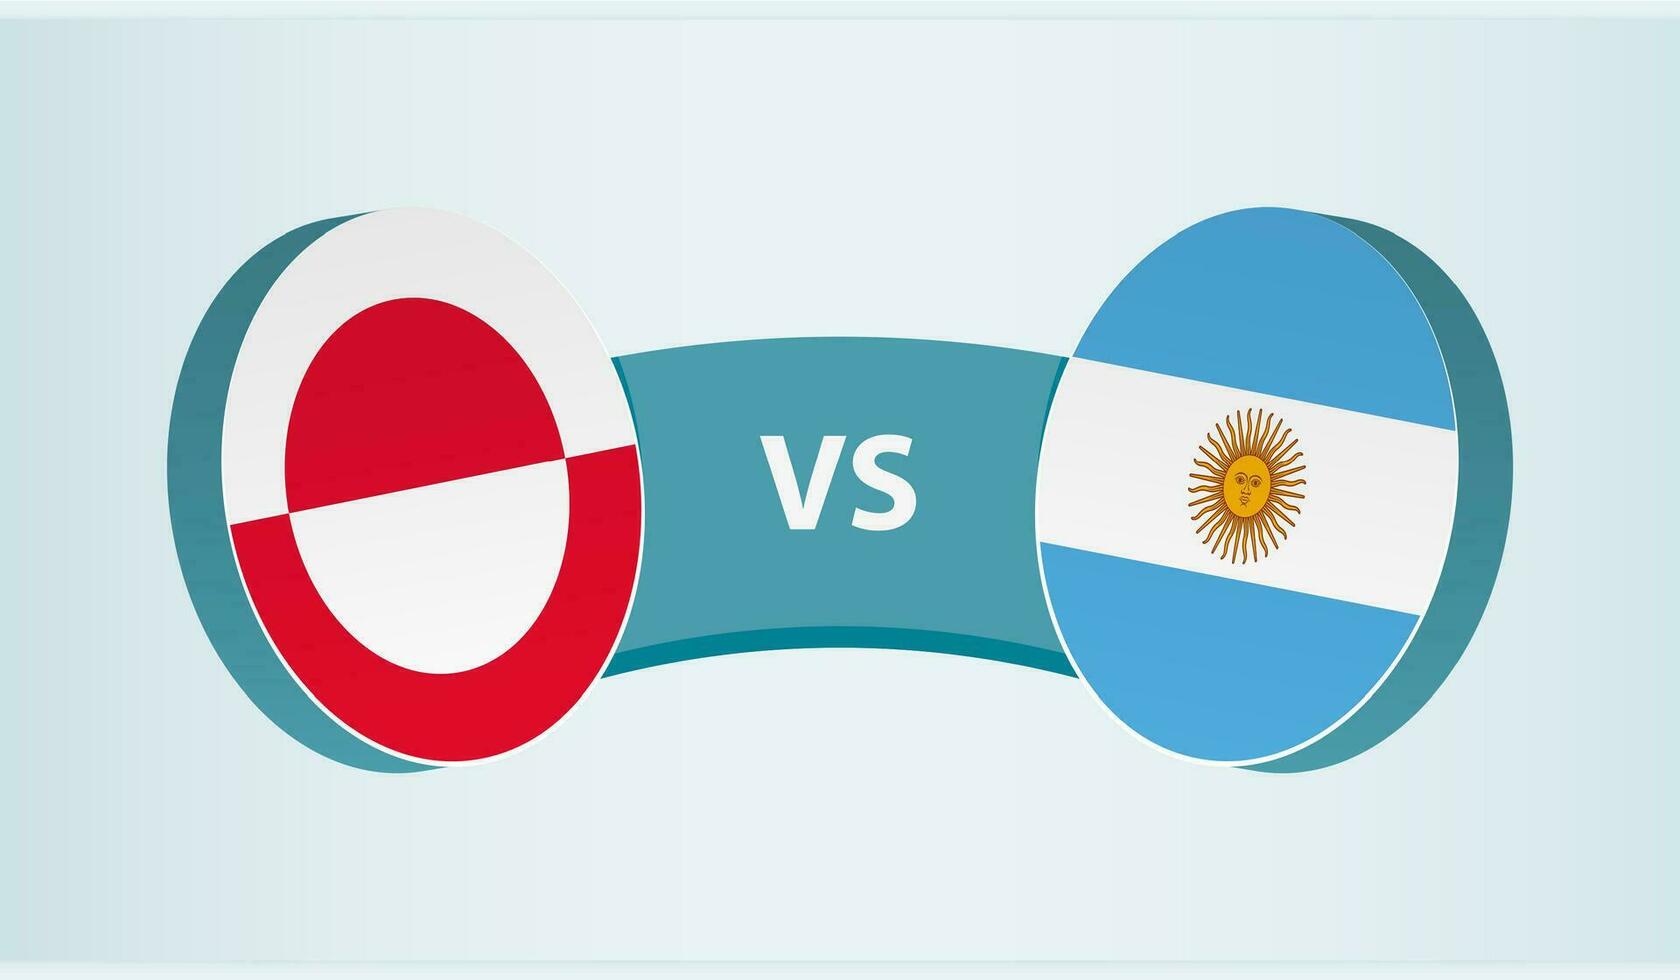 Groenlândia versus Argentina, equipe Esportes concorrência conceito. vetor